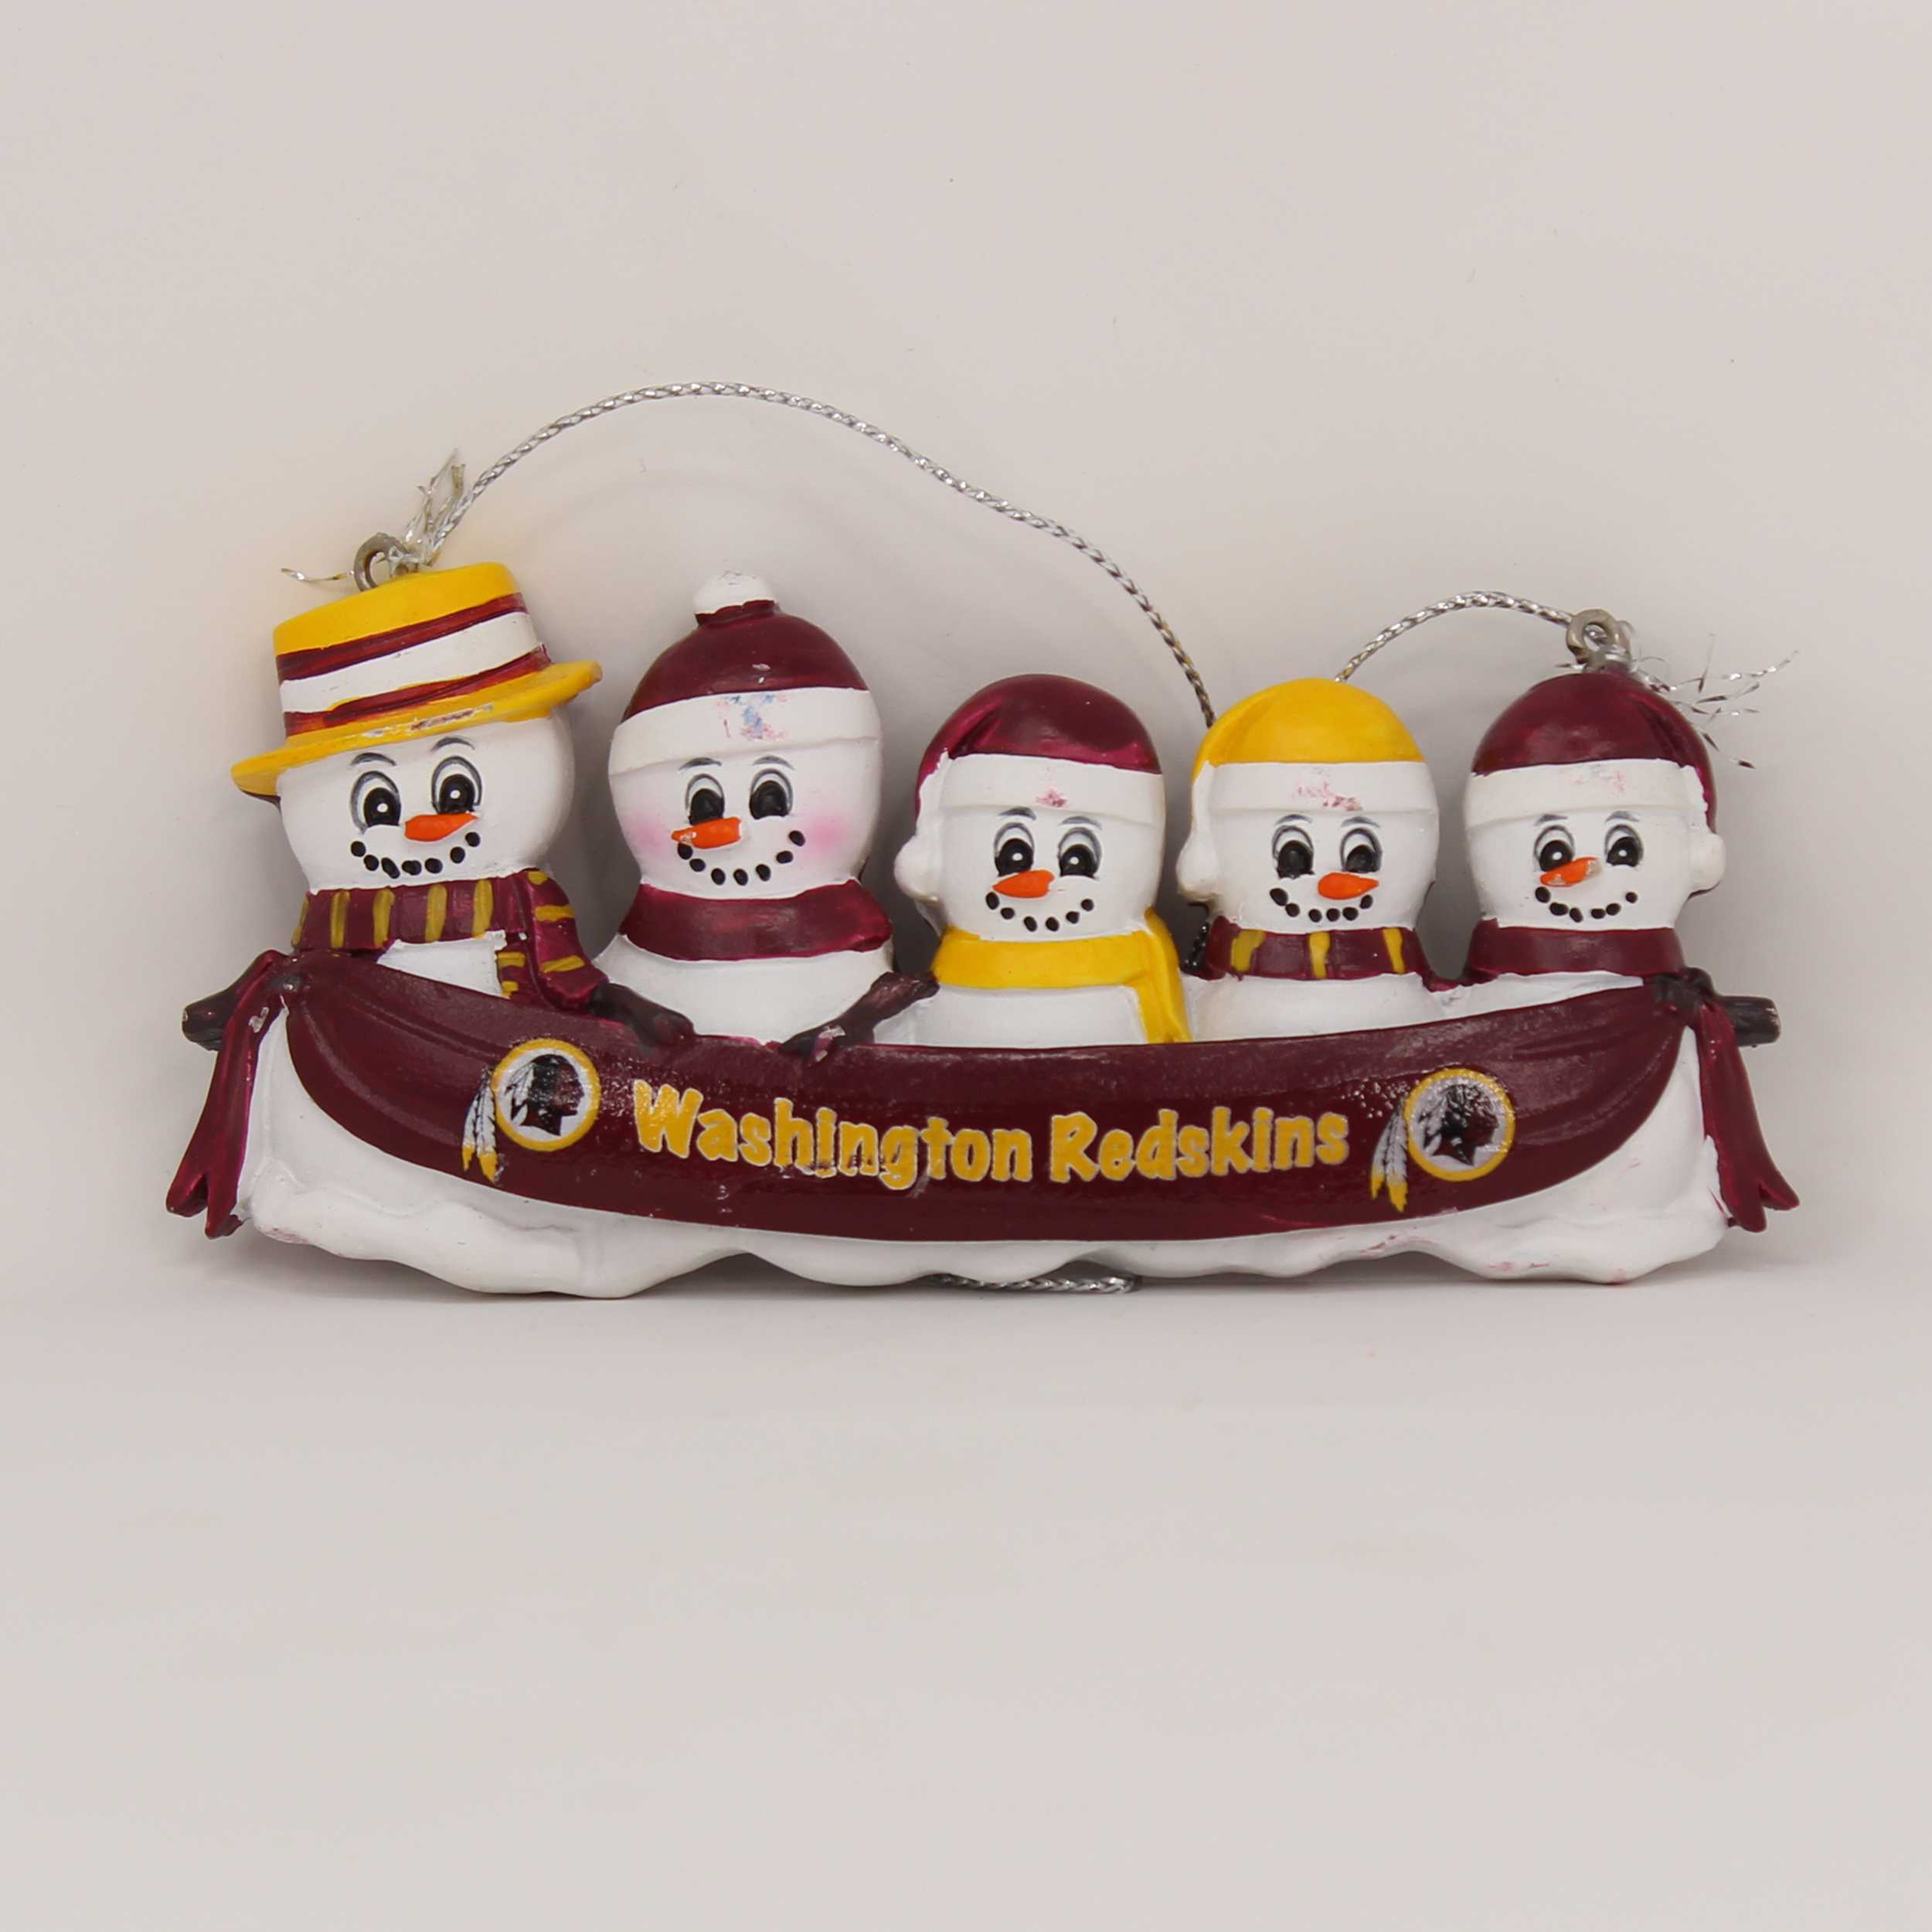 Personalized Family Ornament Washington Redskins